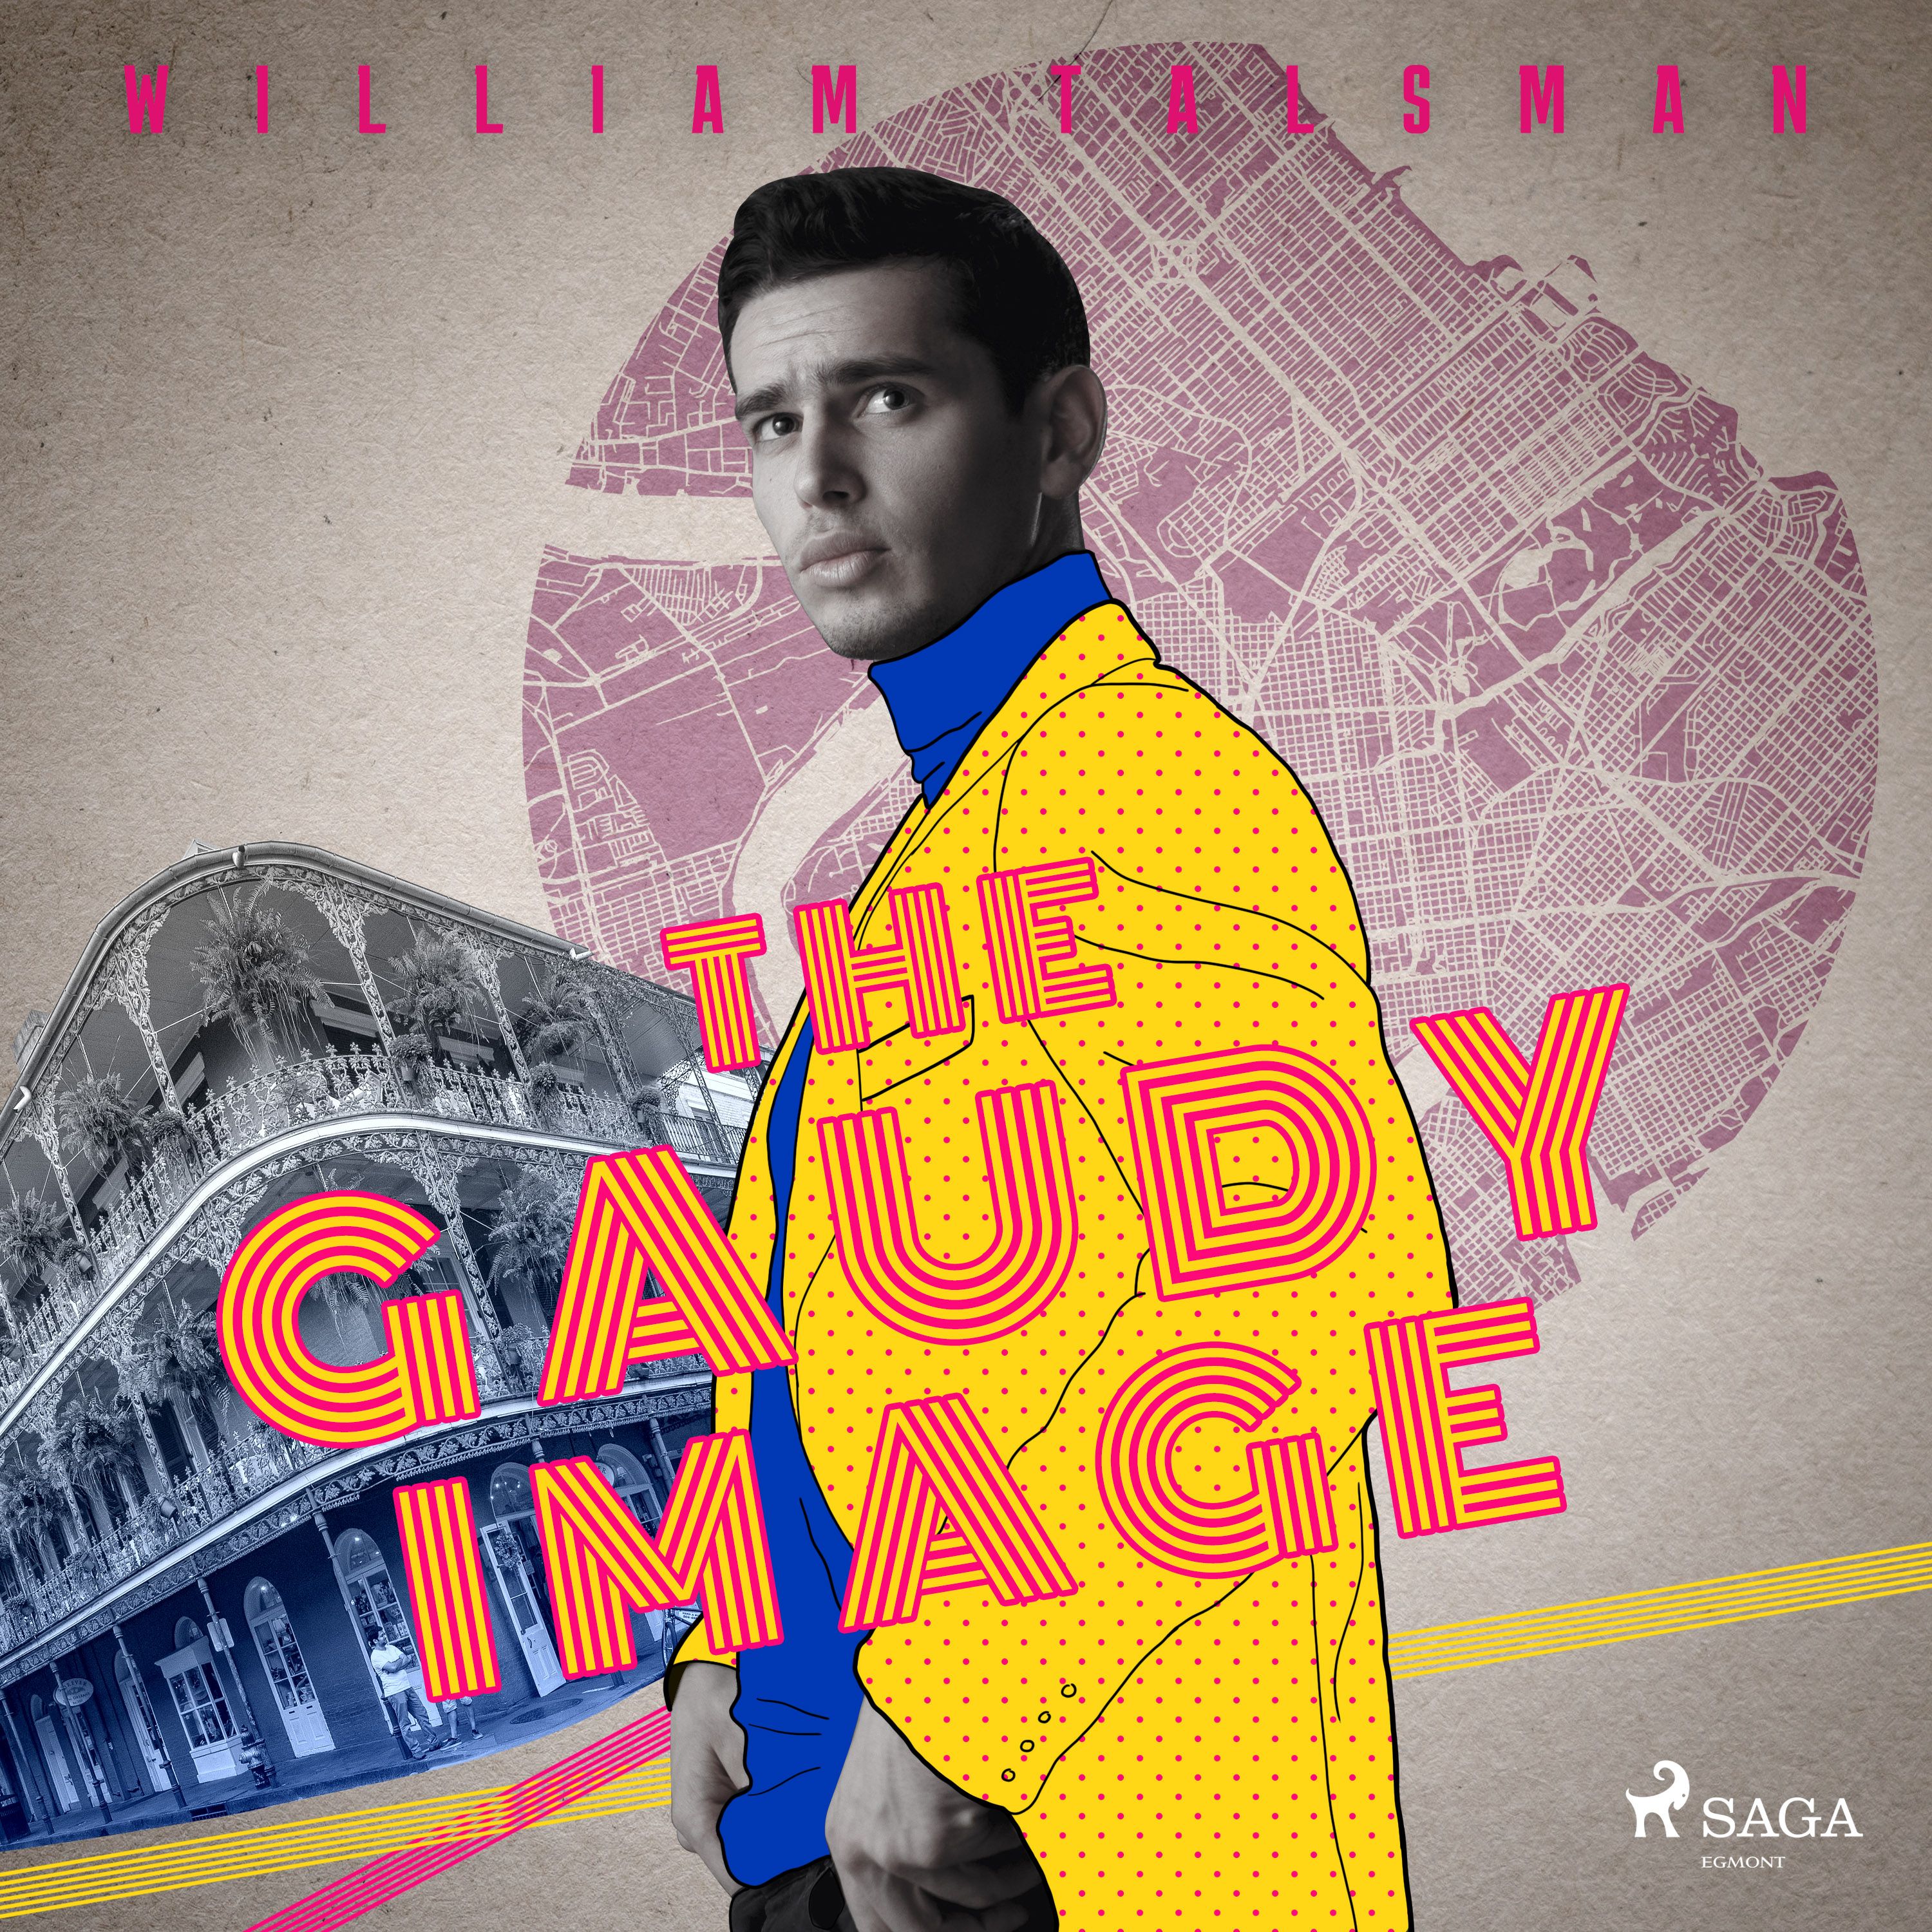 The Gaudy Image, ljudbok av William Talsman